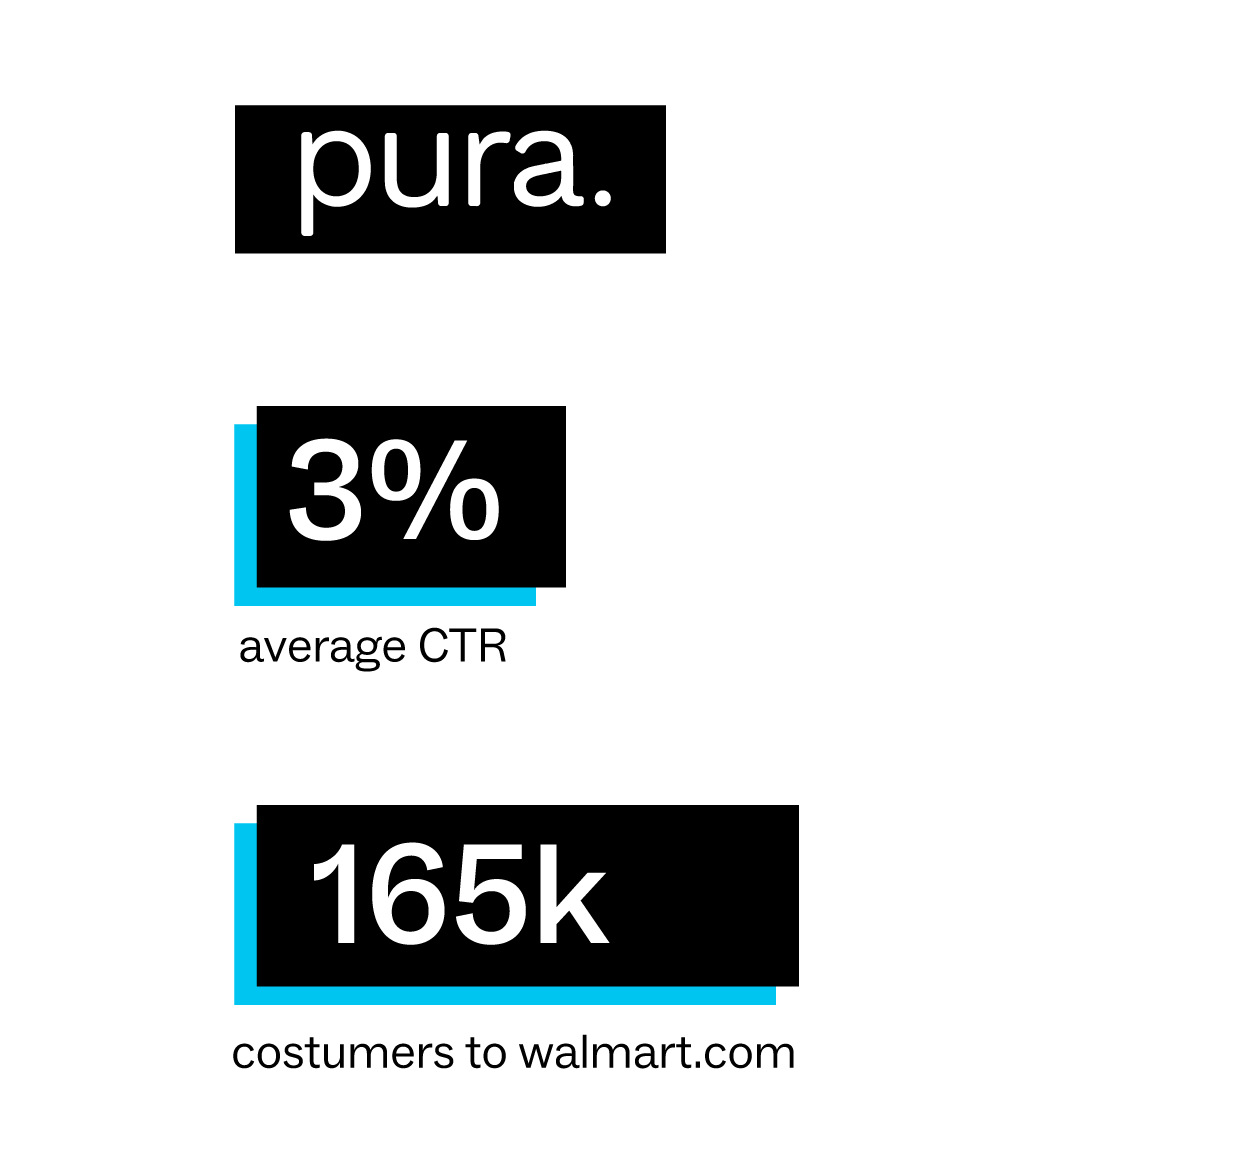 Pura 3% average CTR and 165K customers to walmart.com